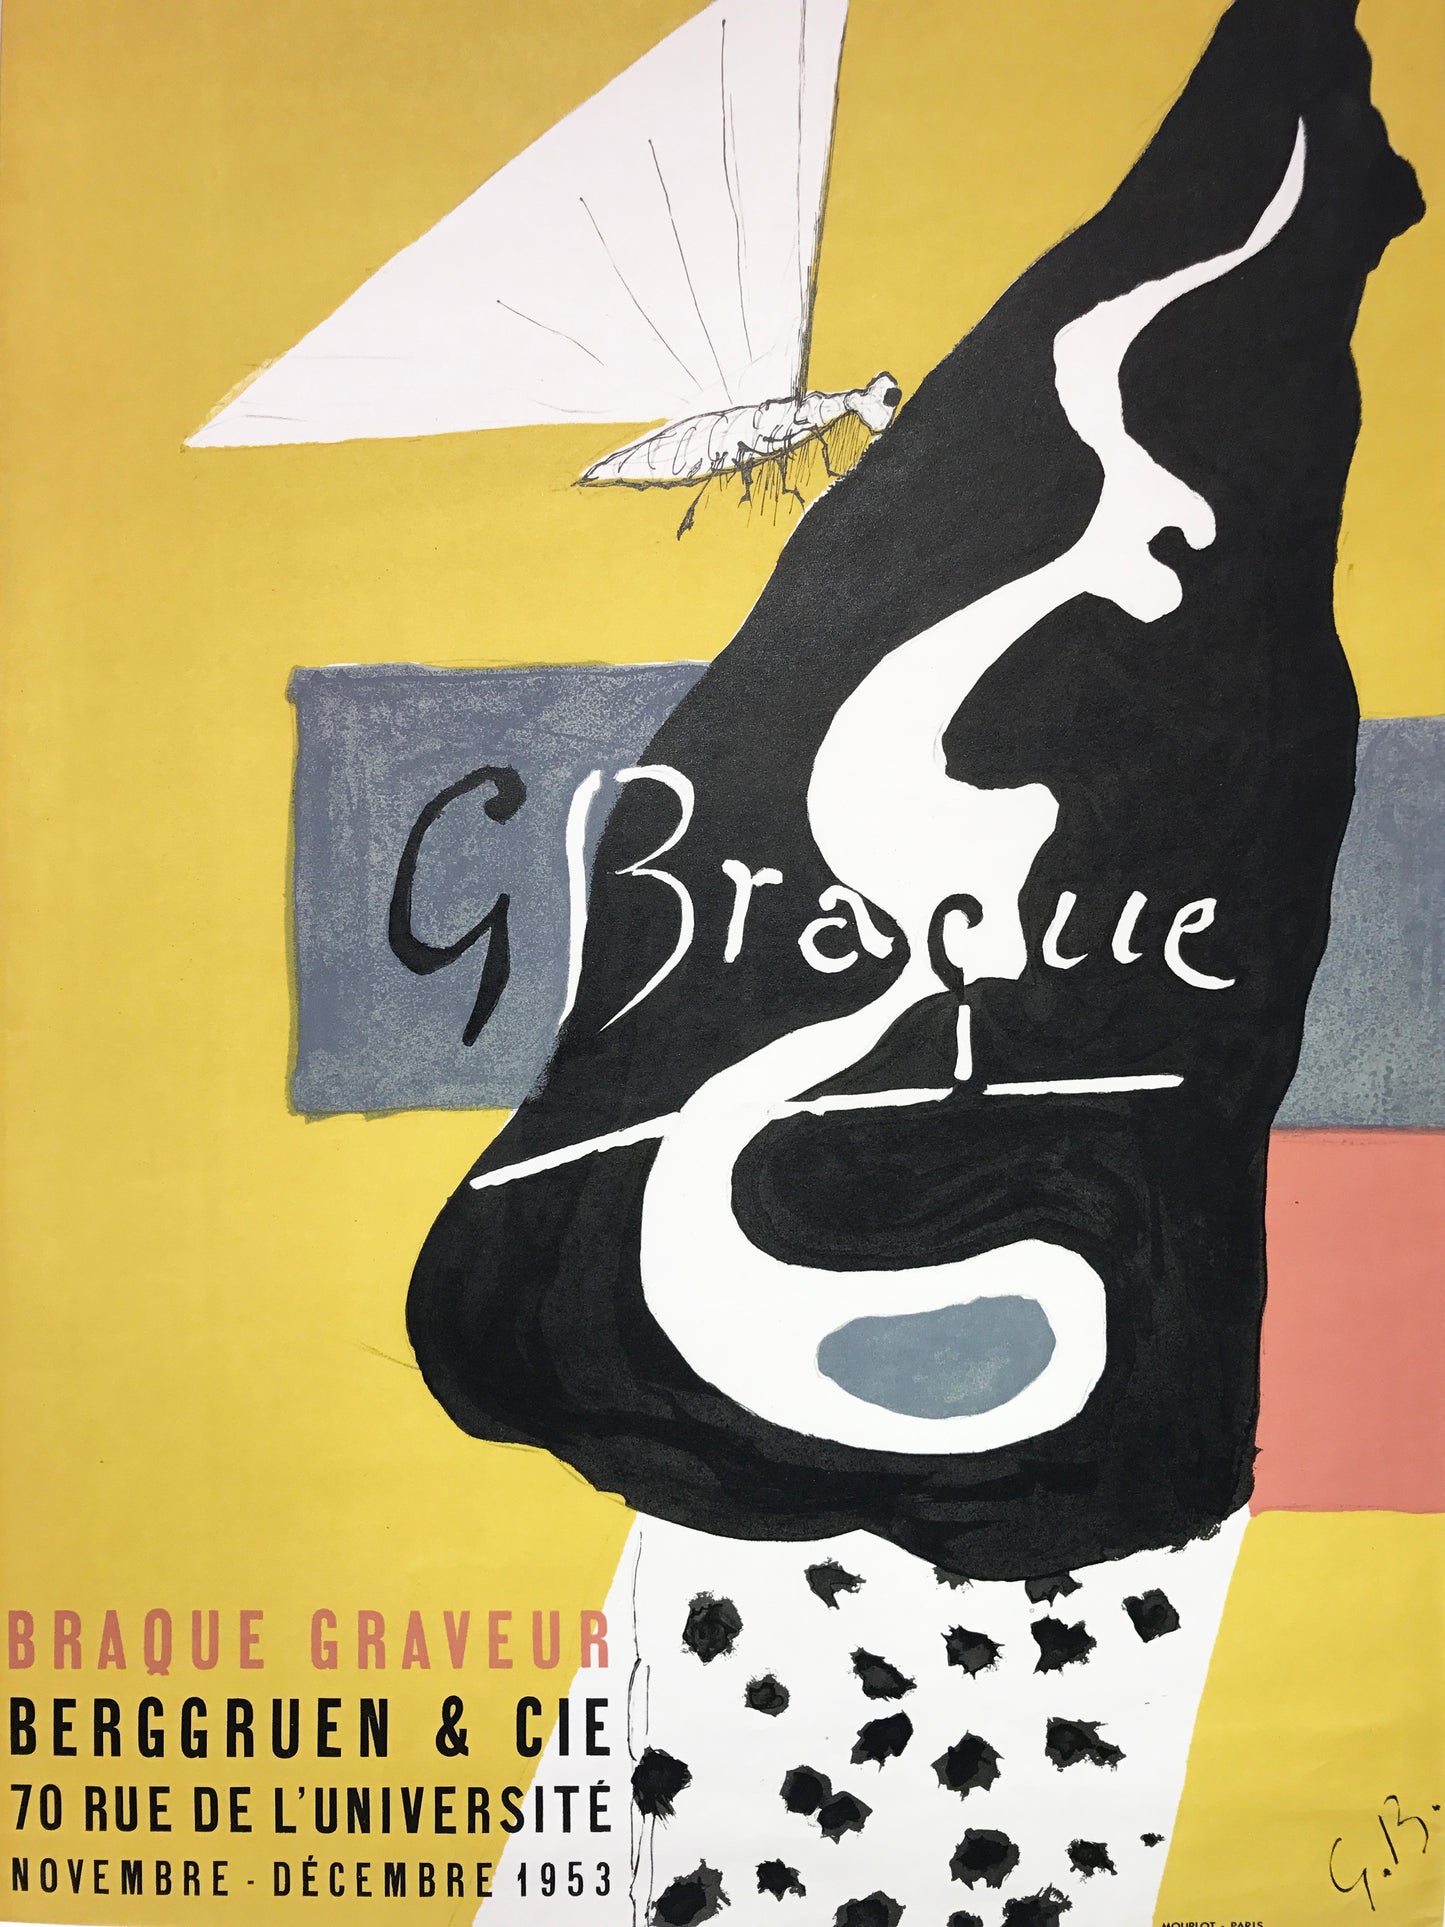 Georges Braque Exhibition Poster: "Braque Graveur" for the Berggruen Gallery, 1953